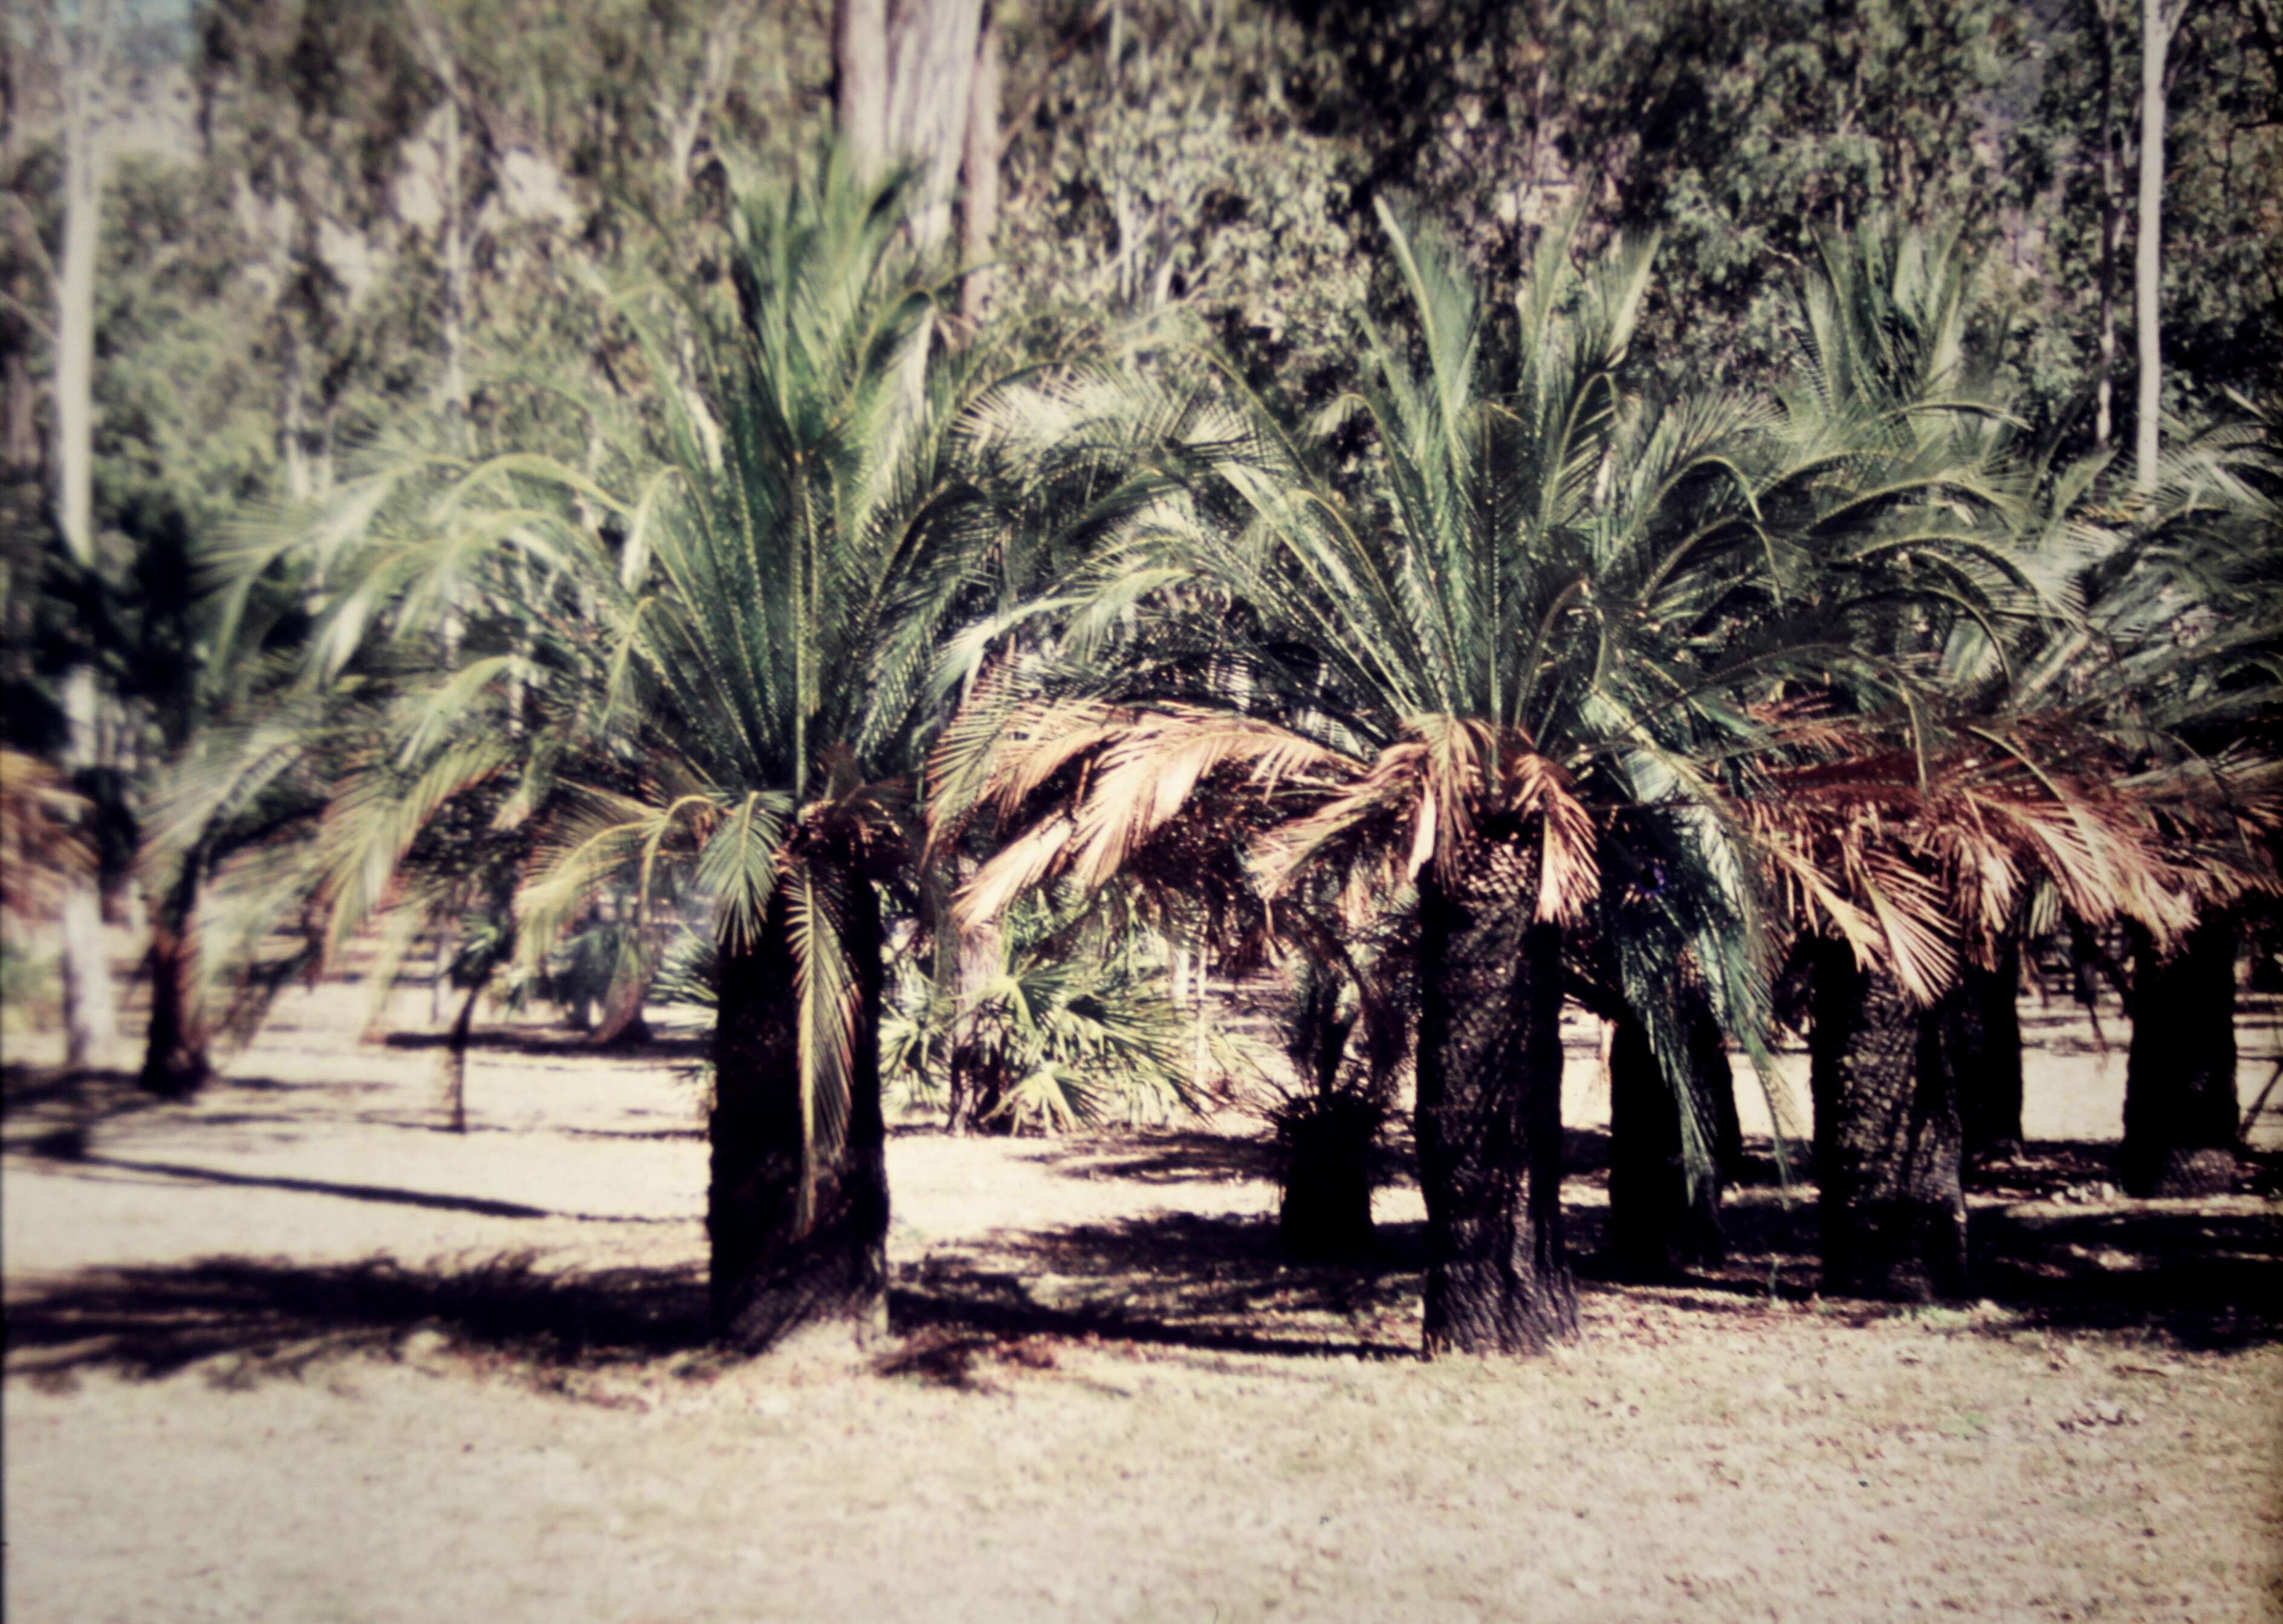 Image of Zamia ferns